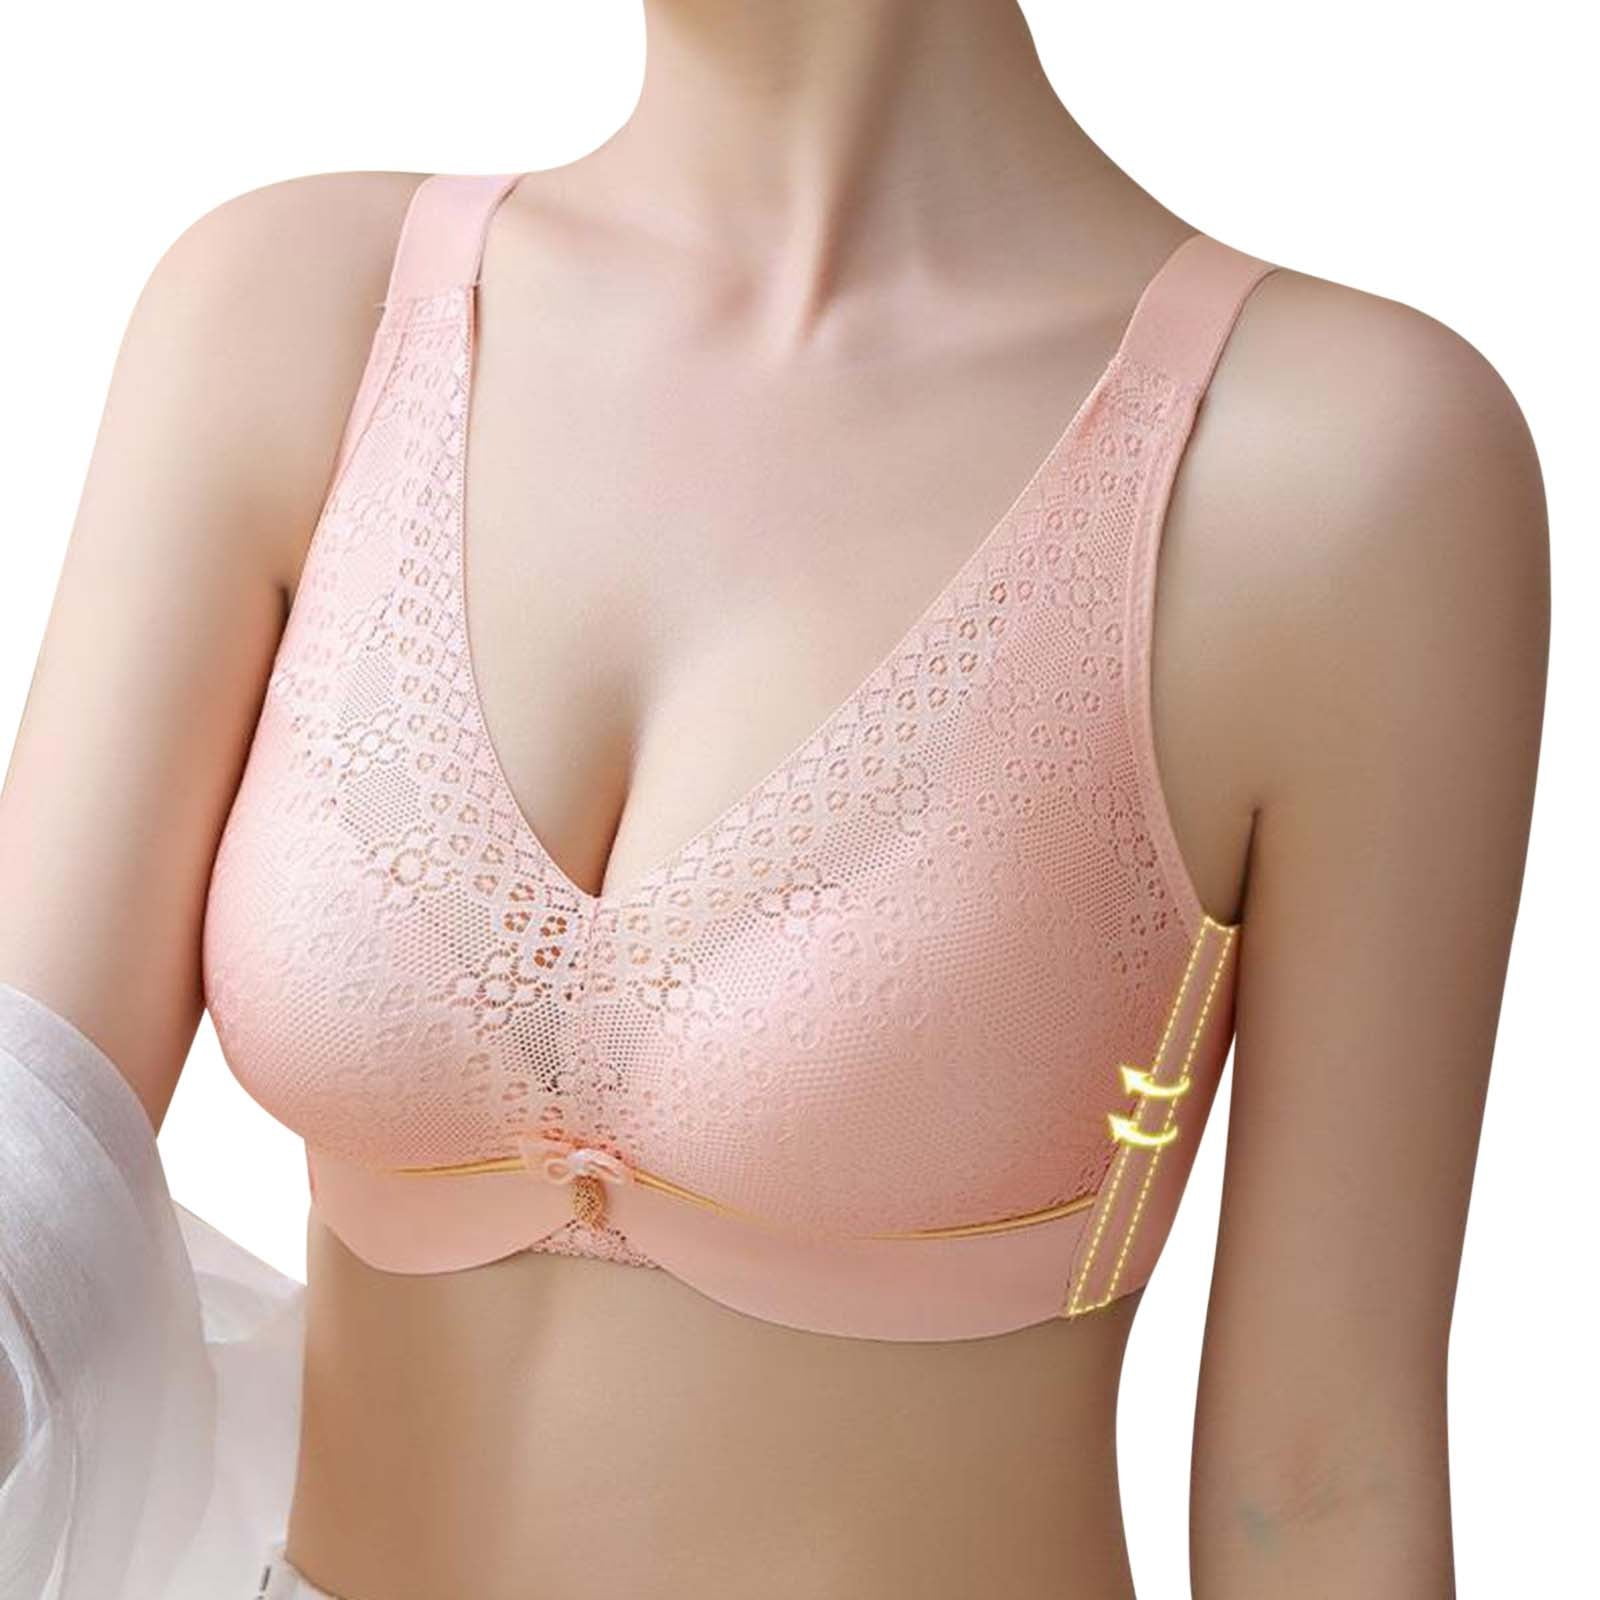 gvdentm Bras,Women's 18 Hour Silky Soft Smoothing Wireless Bra Hot Pink,42  